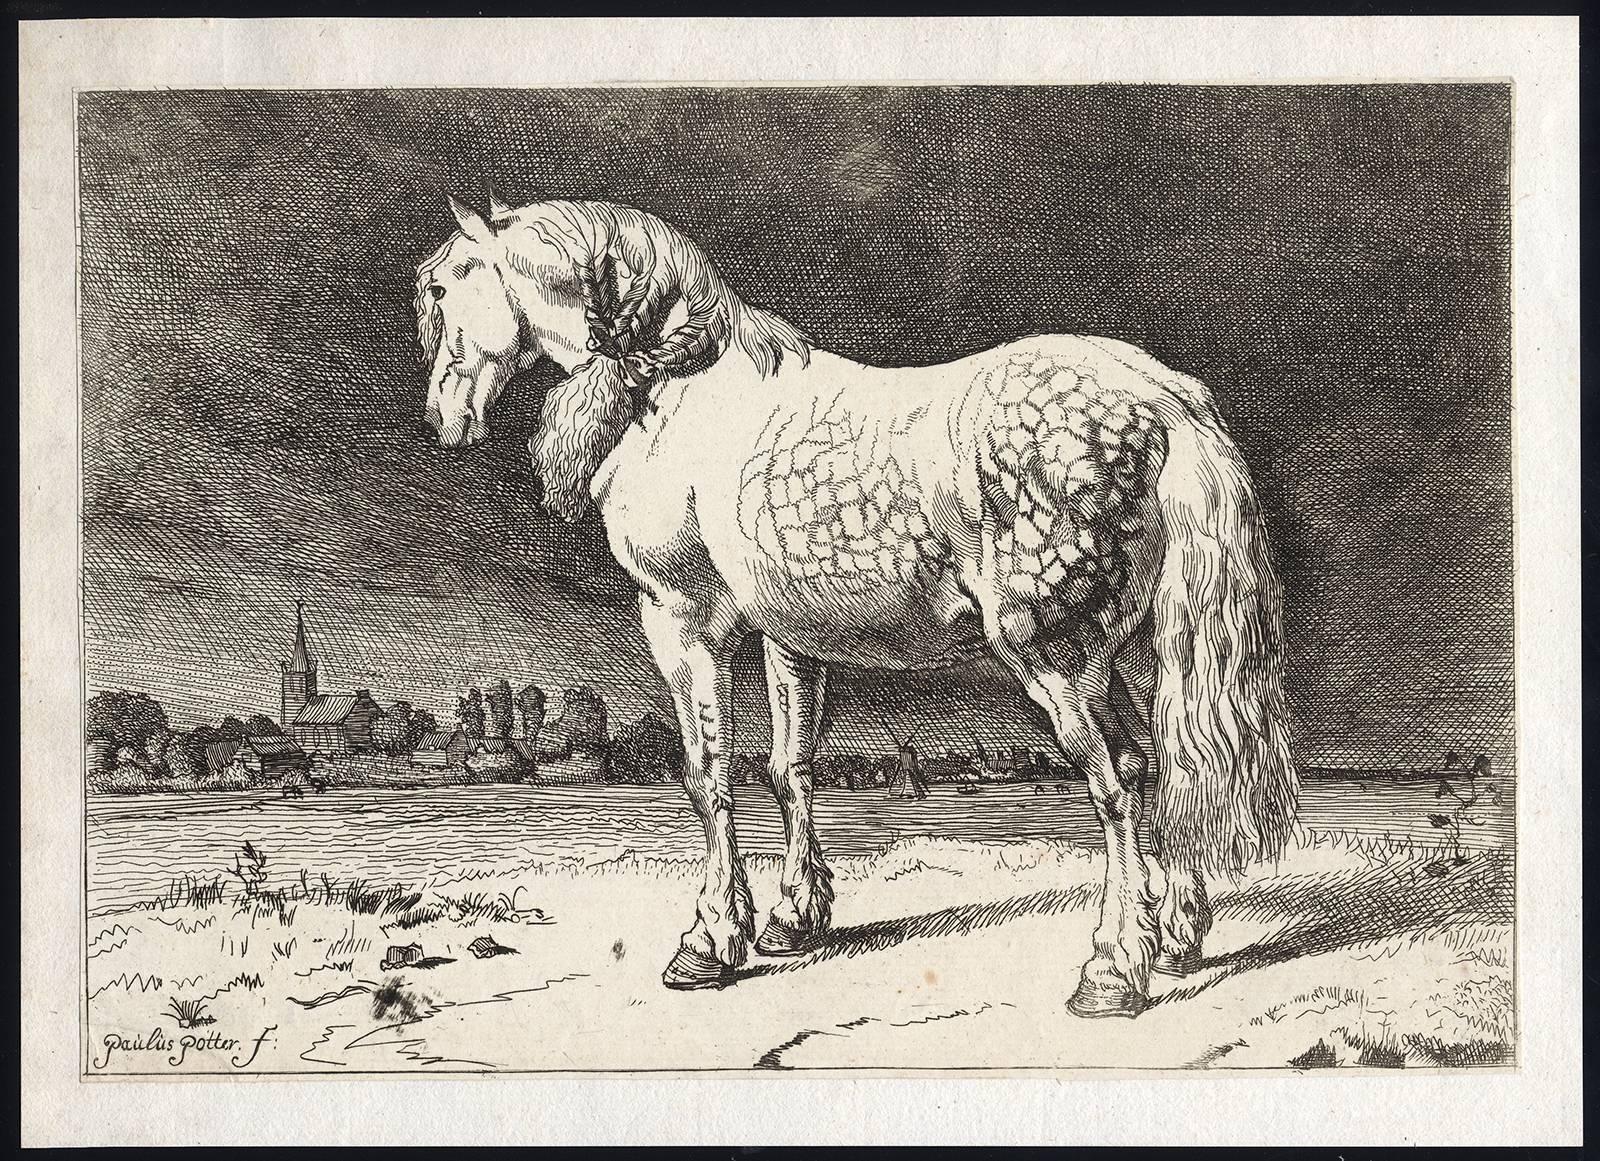 Set of 5 horses in landscape - Print by Paulus Potter